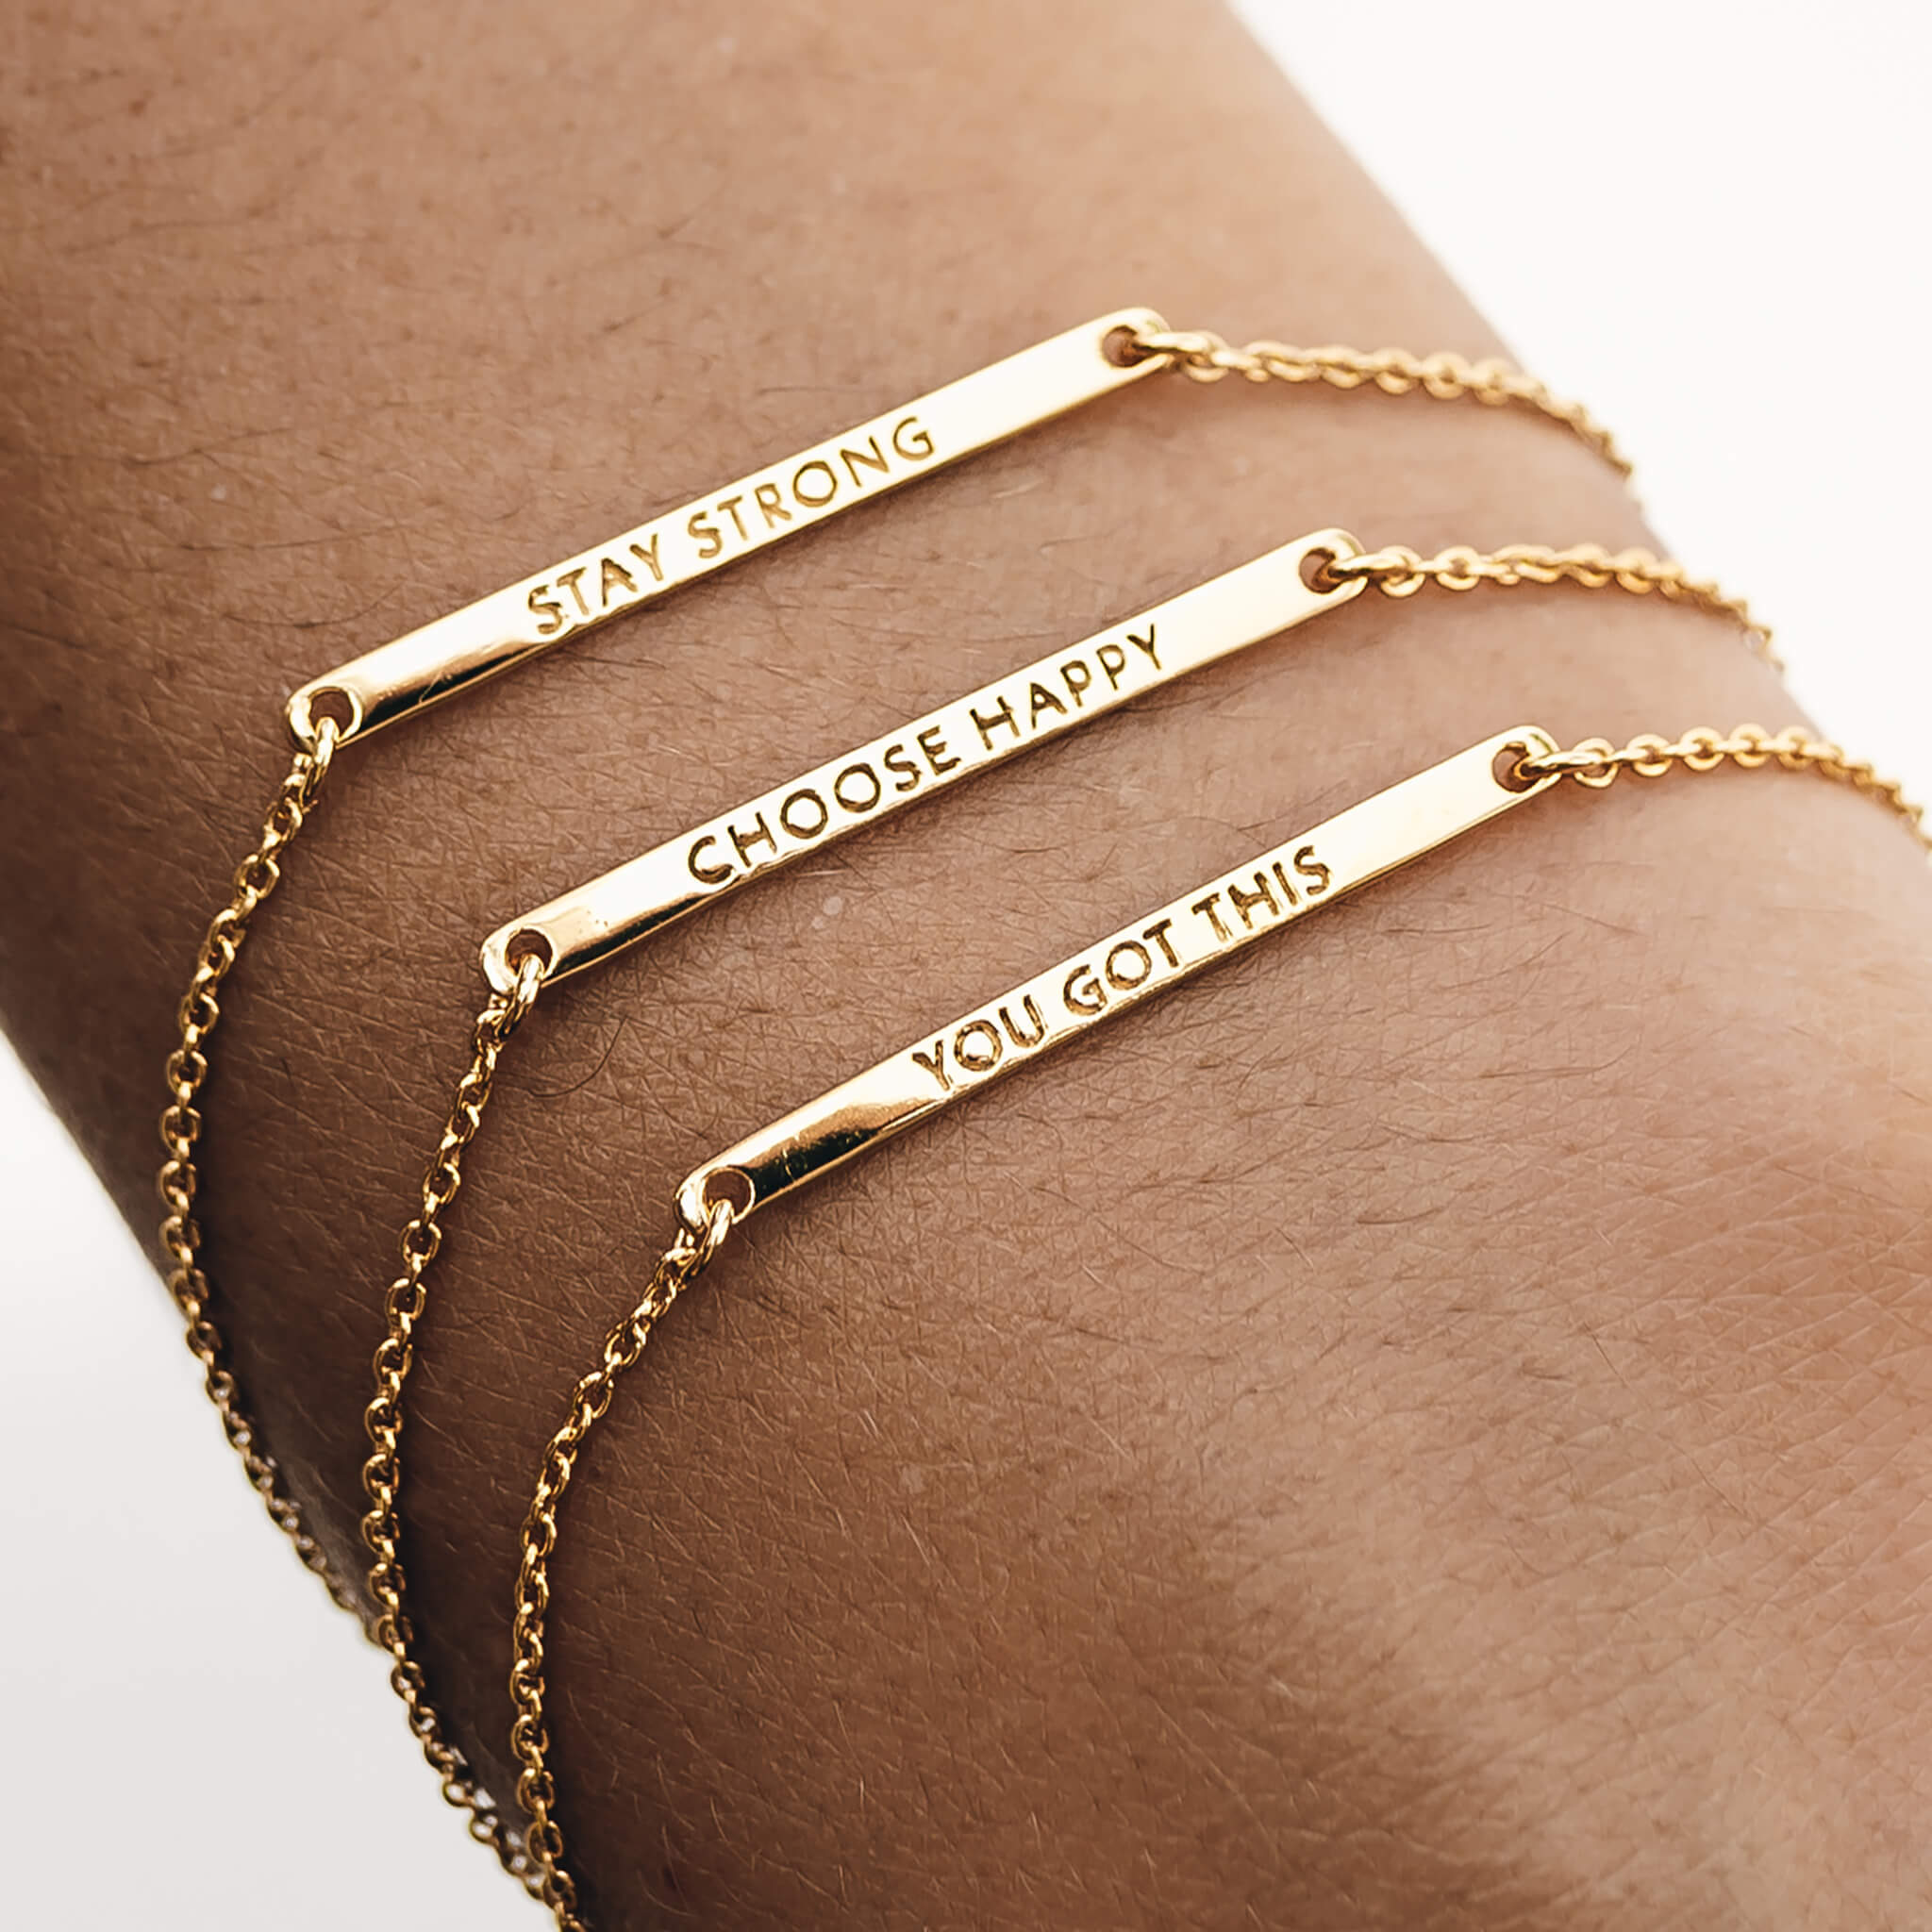 Inspiration Bracelet - Choose Happy (Gold Vermeil) | Linjer Jewelry